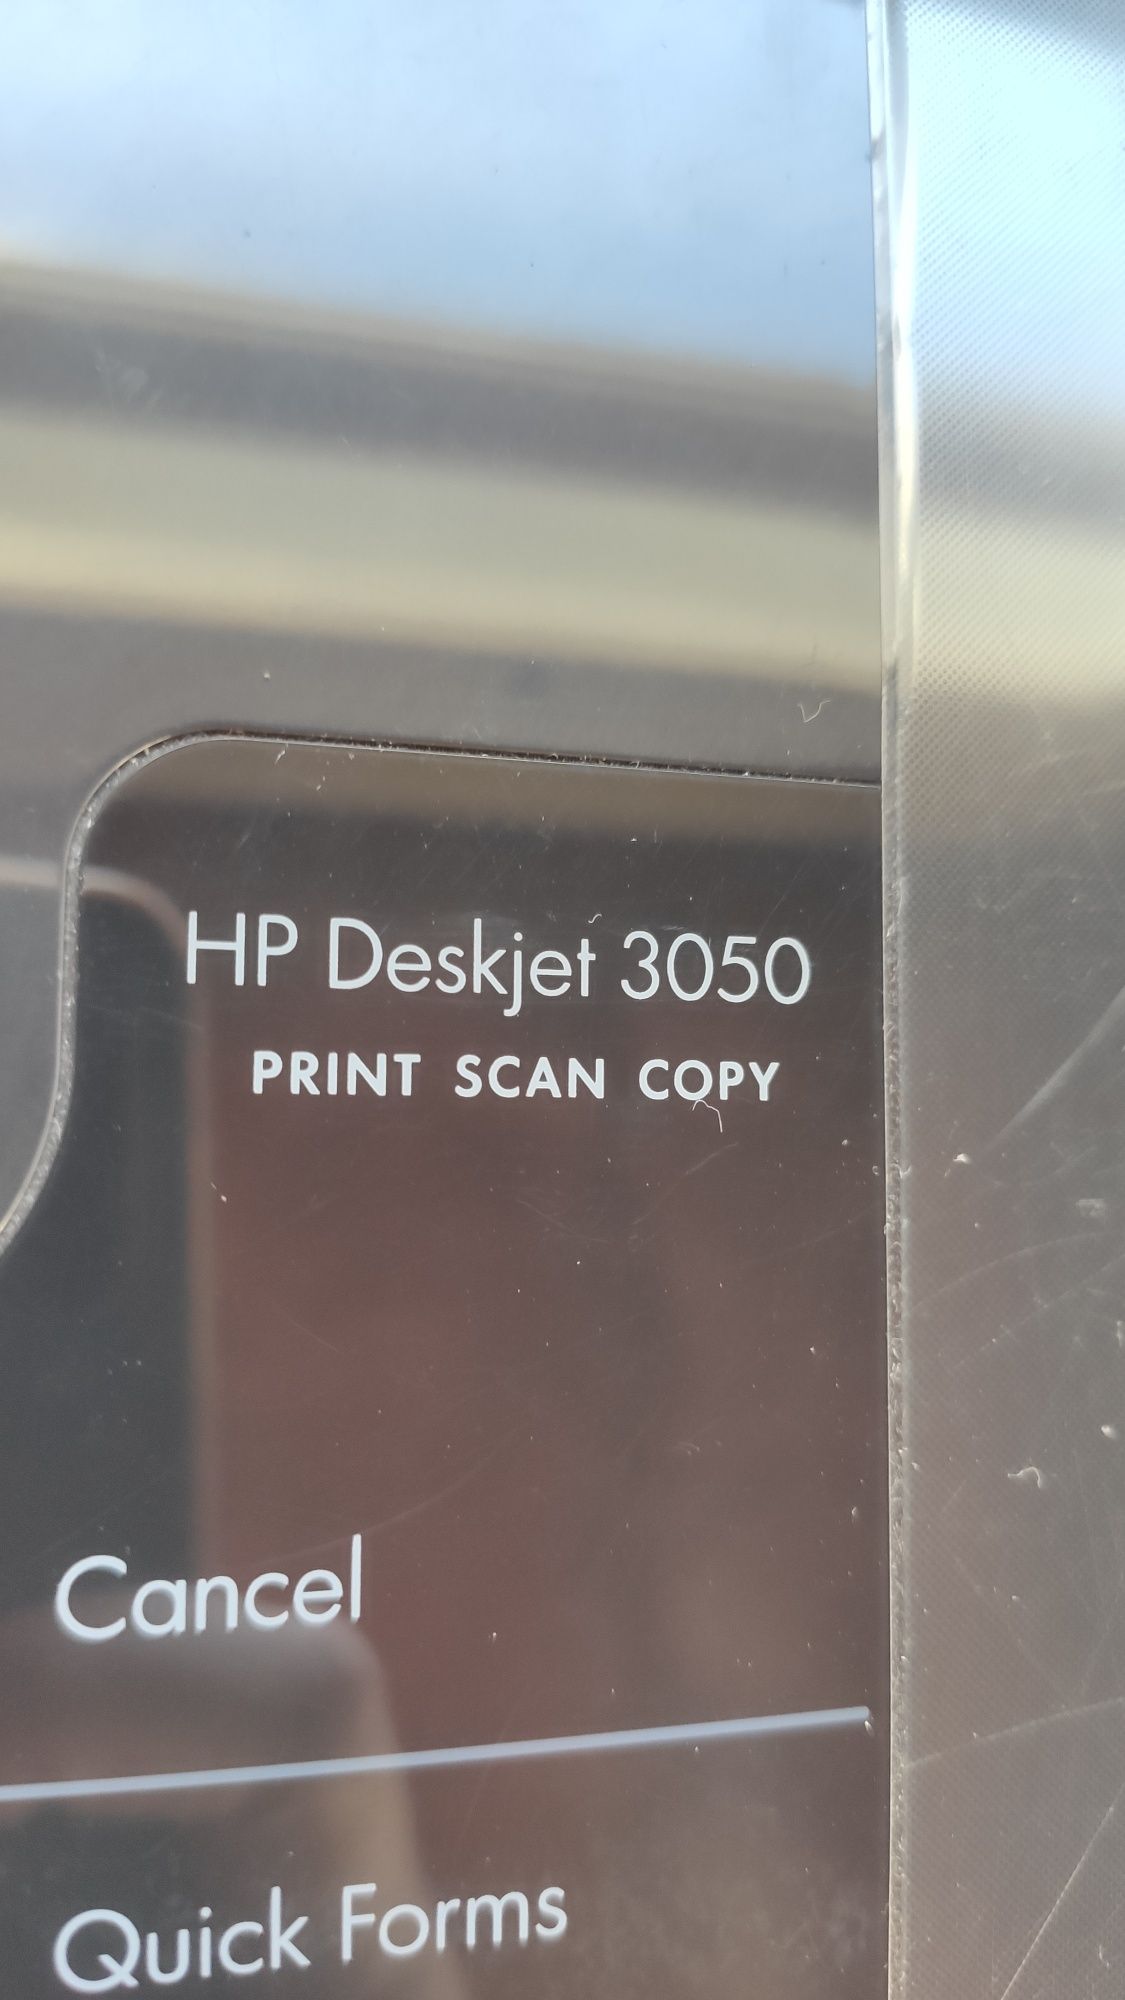 HP deskjet 3050 multifunções (print, scan, copy) ainda com plástico